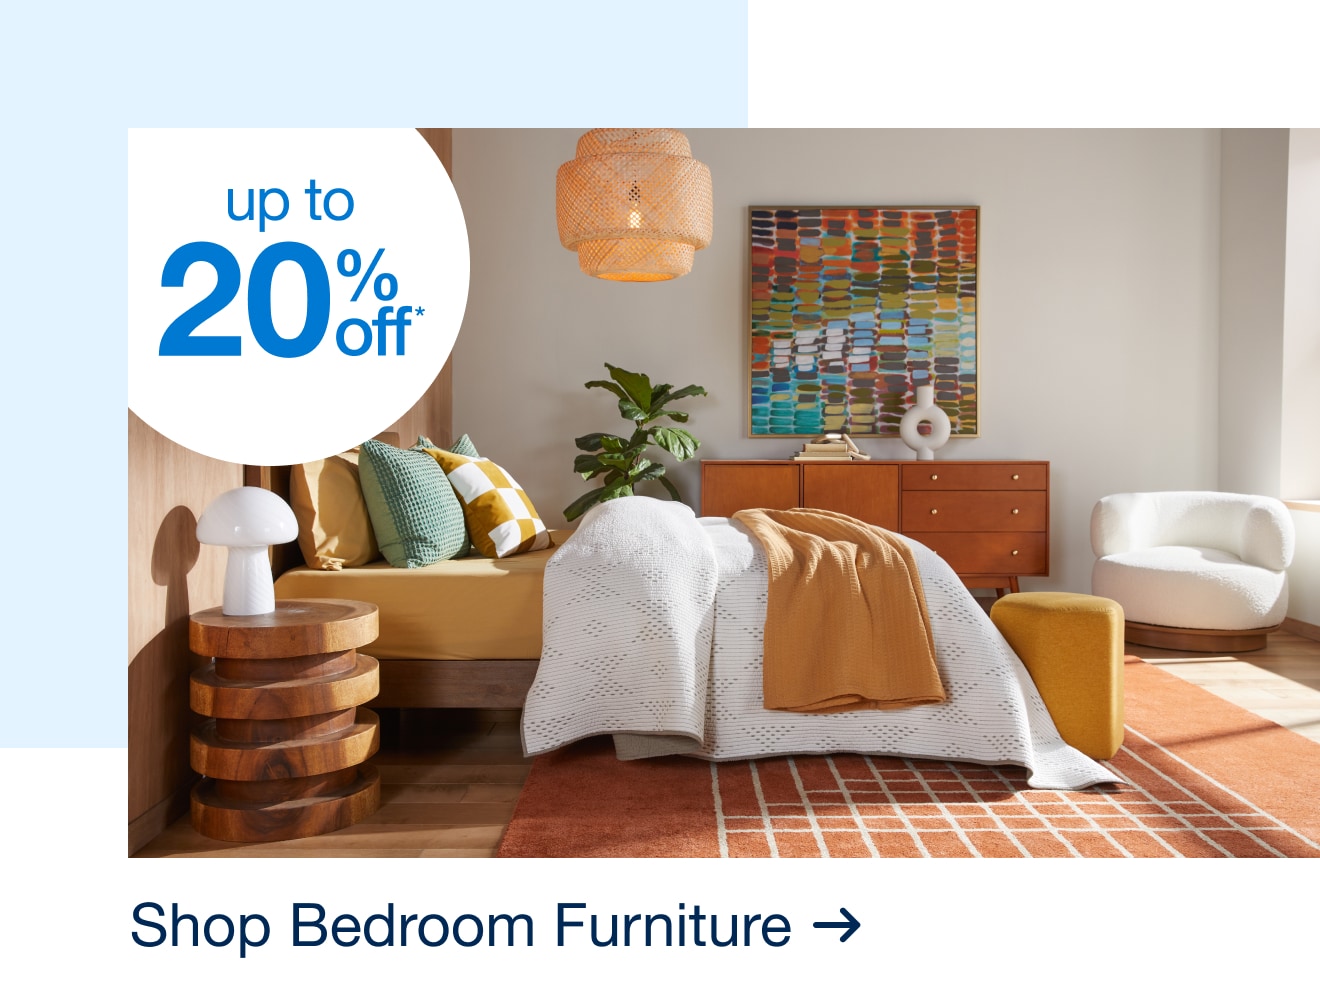 Up to 20% off - Shop Bedroom Furniture